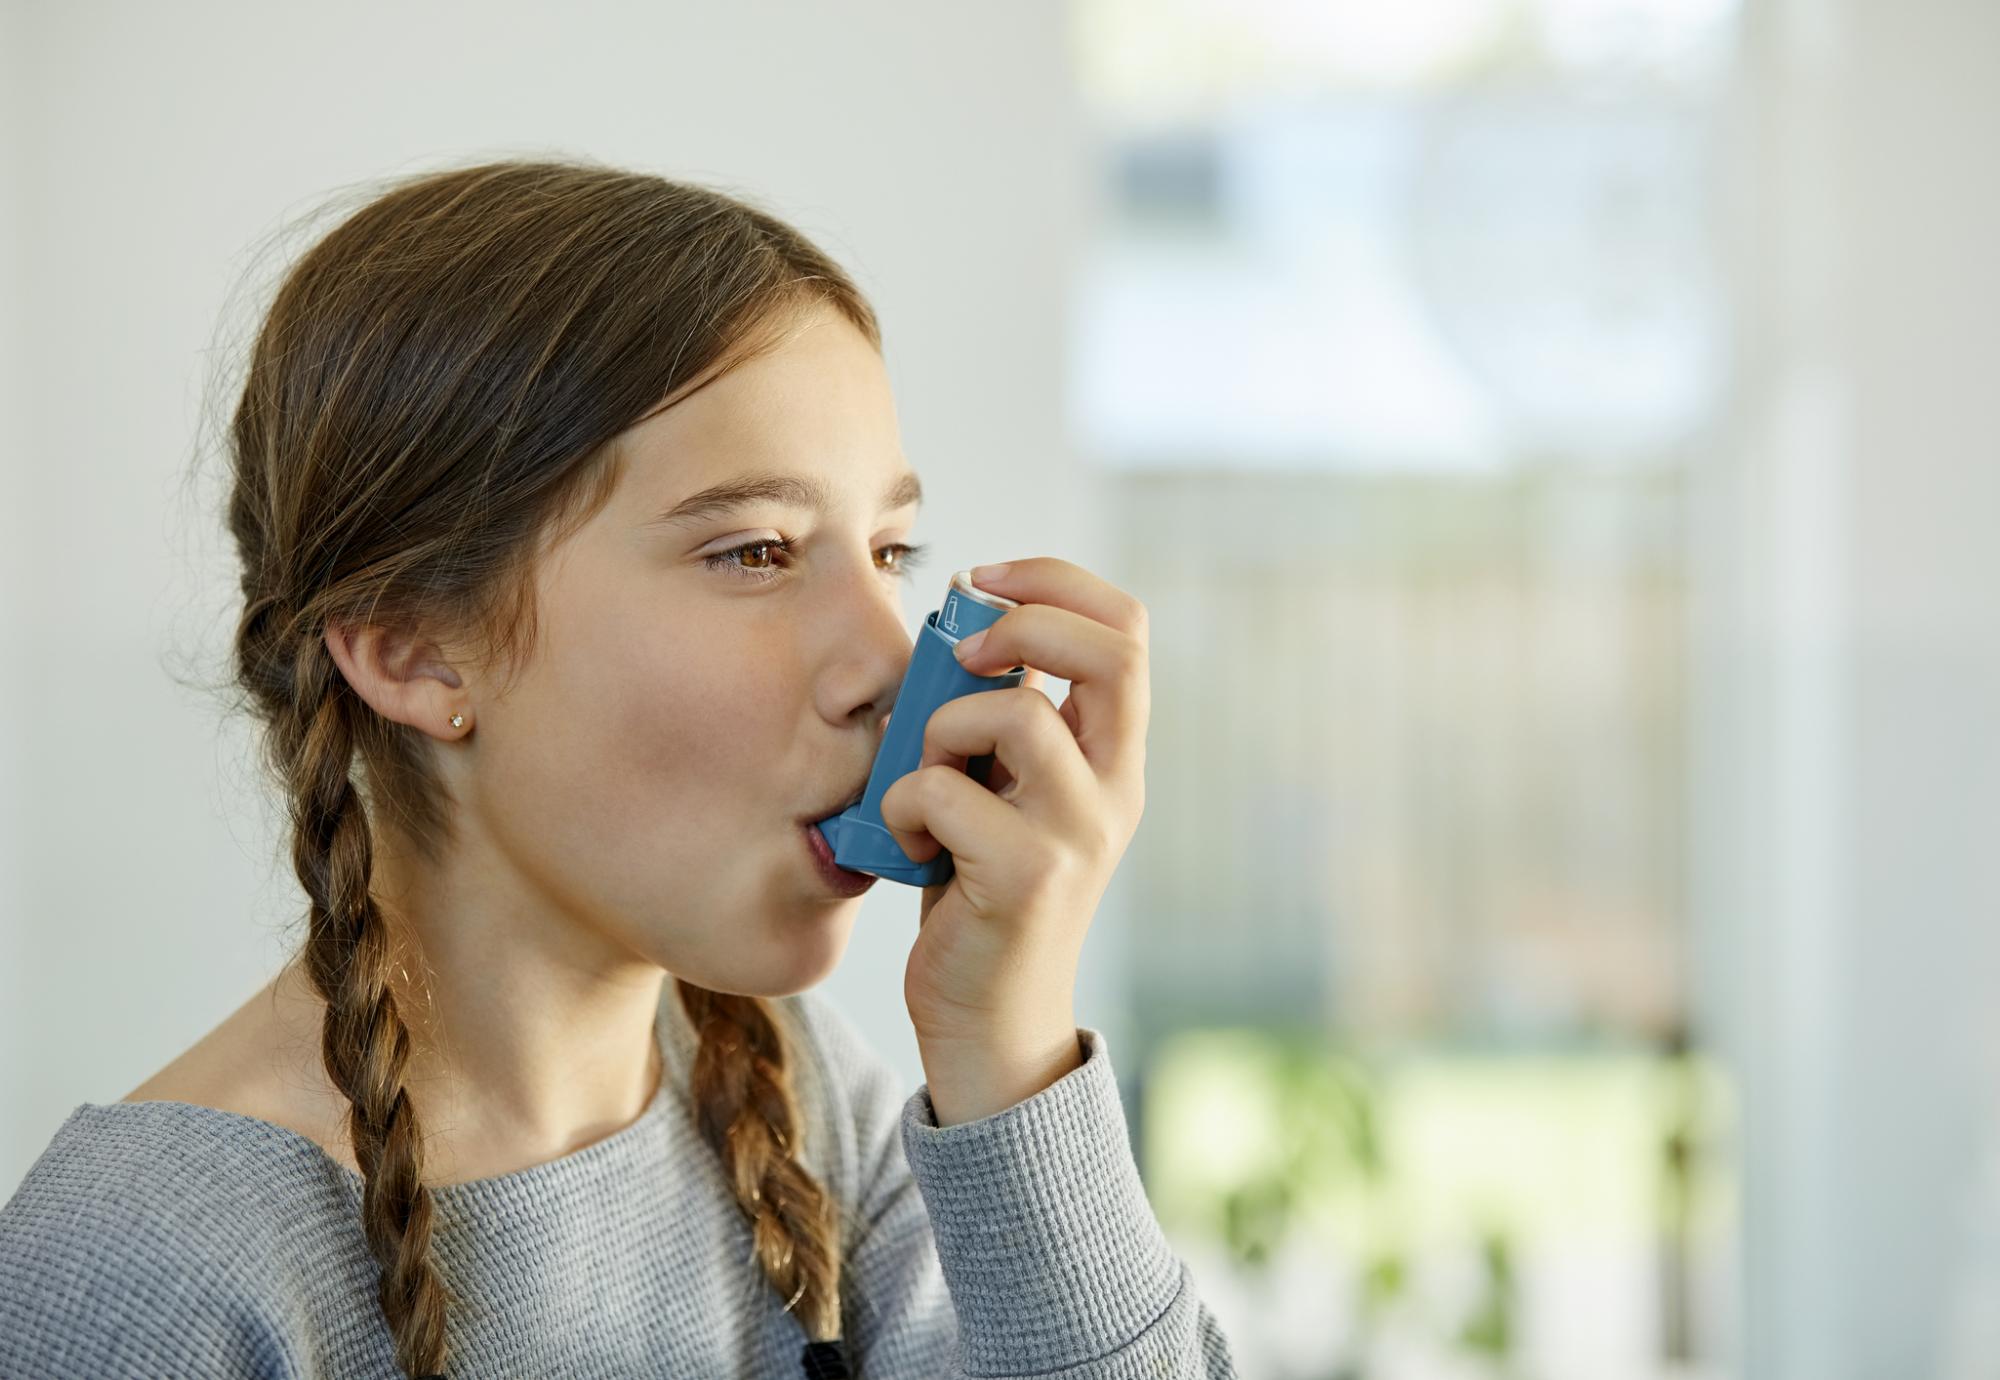 Young girl using asthma inhaler